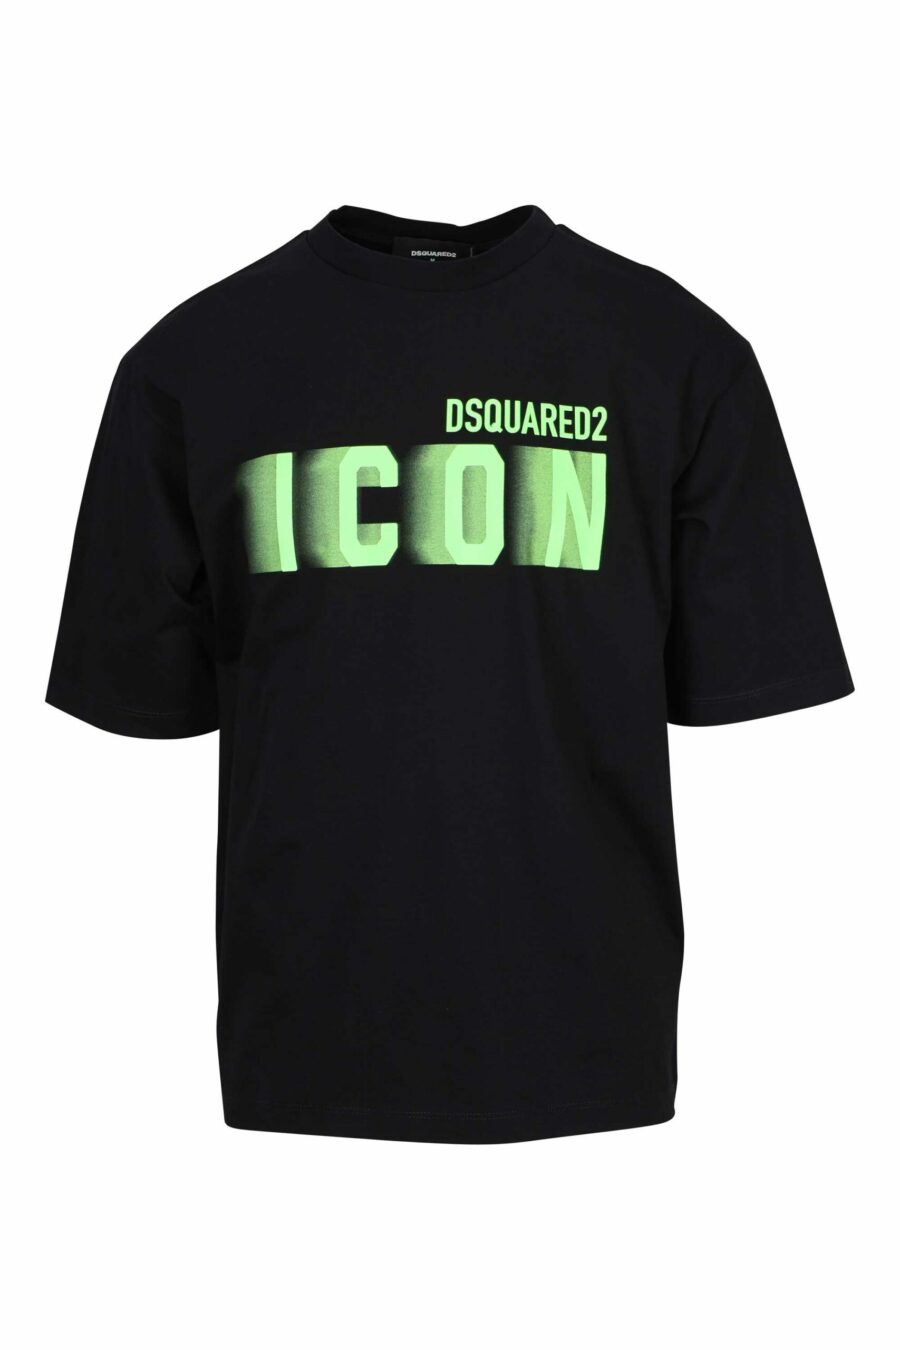 T-shirt noir oversize avec maxilogo "icon" flou vert fluo - 8054148359669 scaled